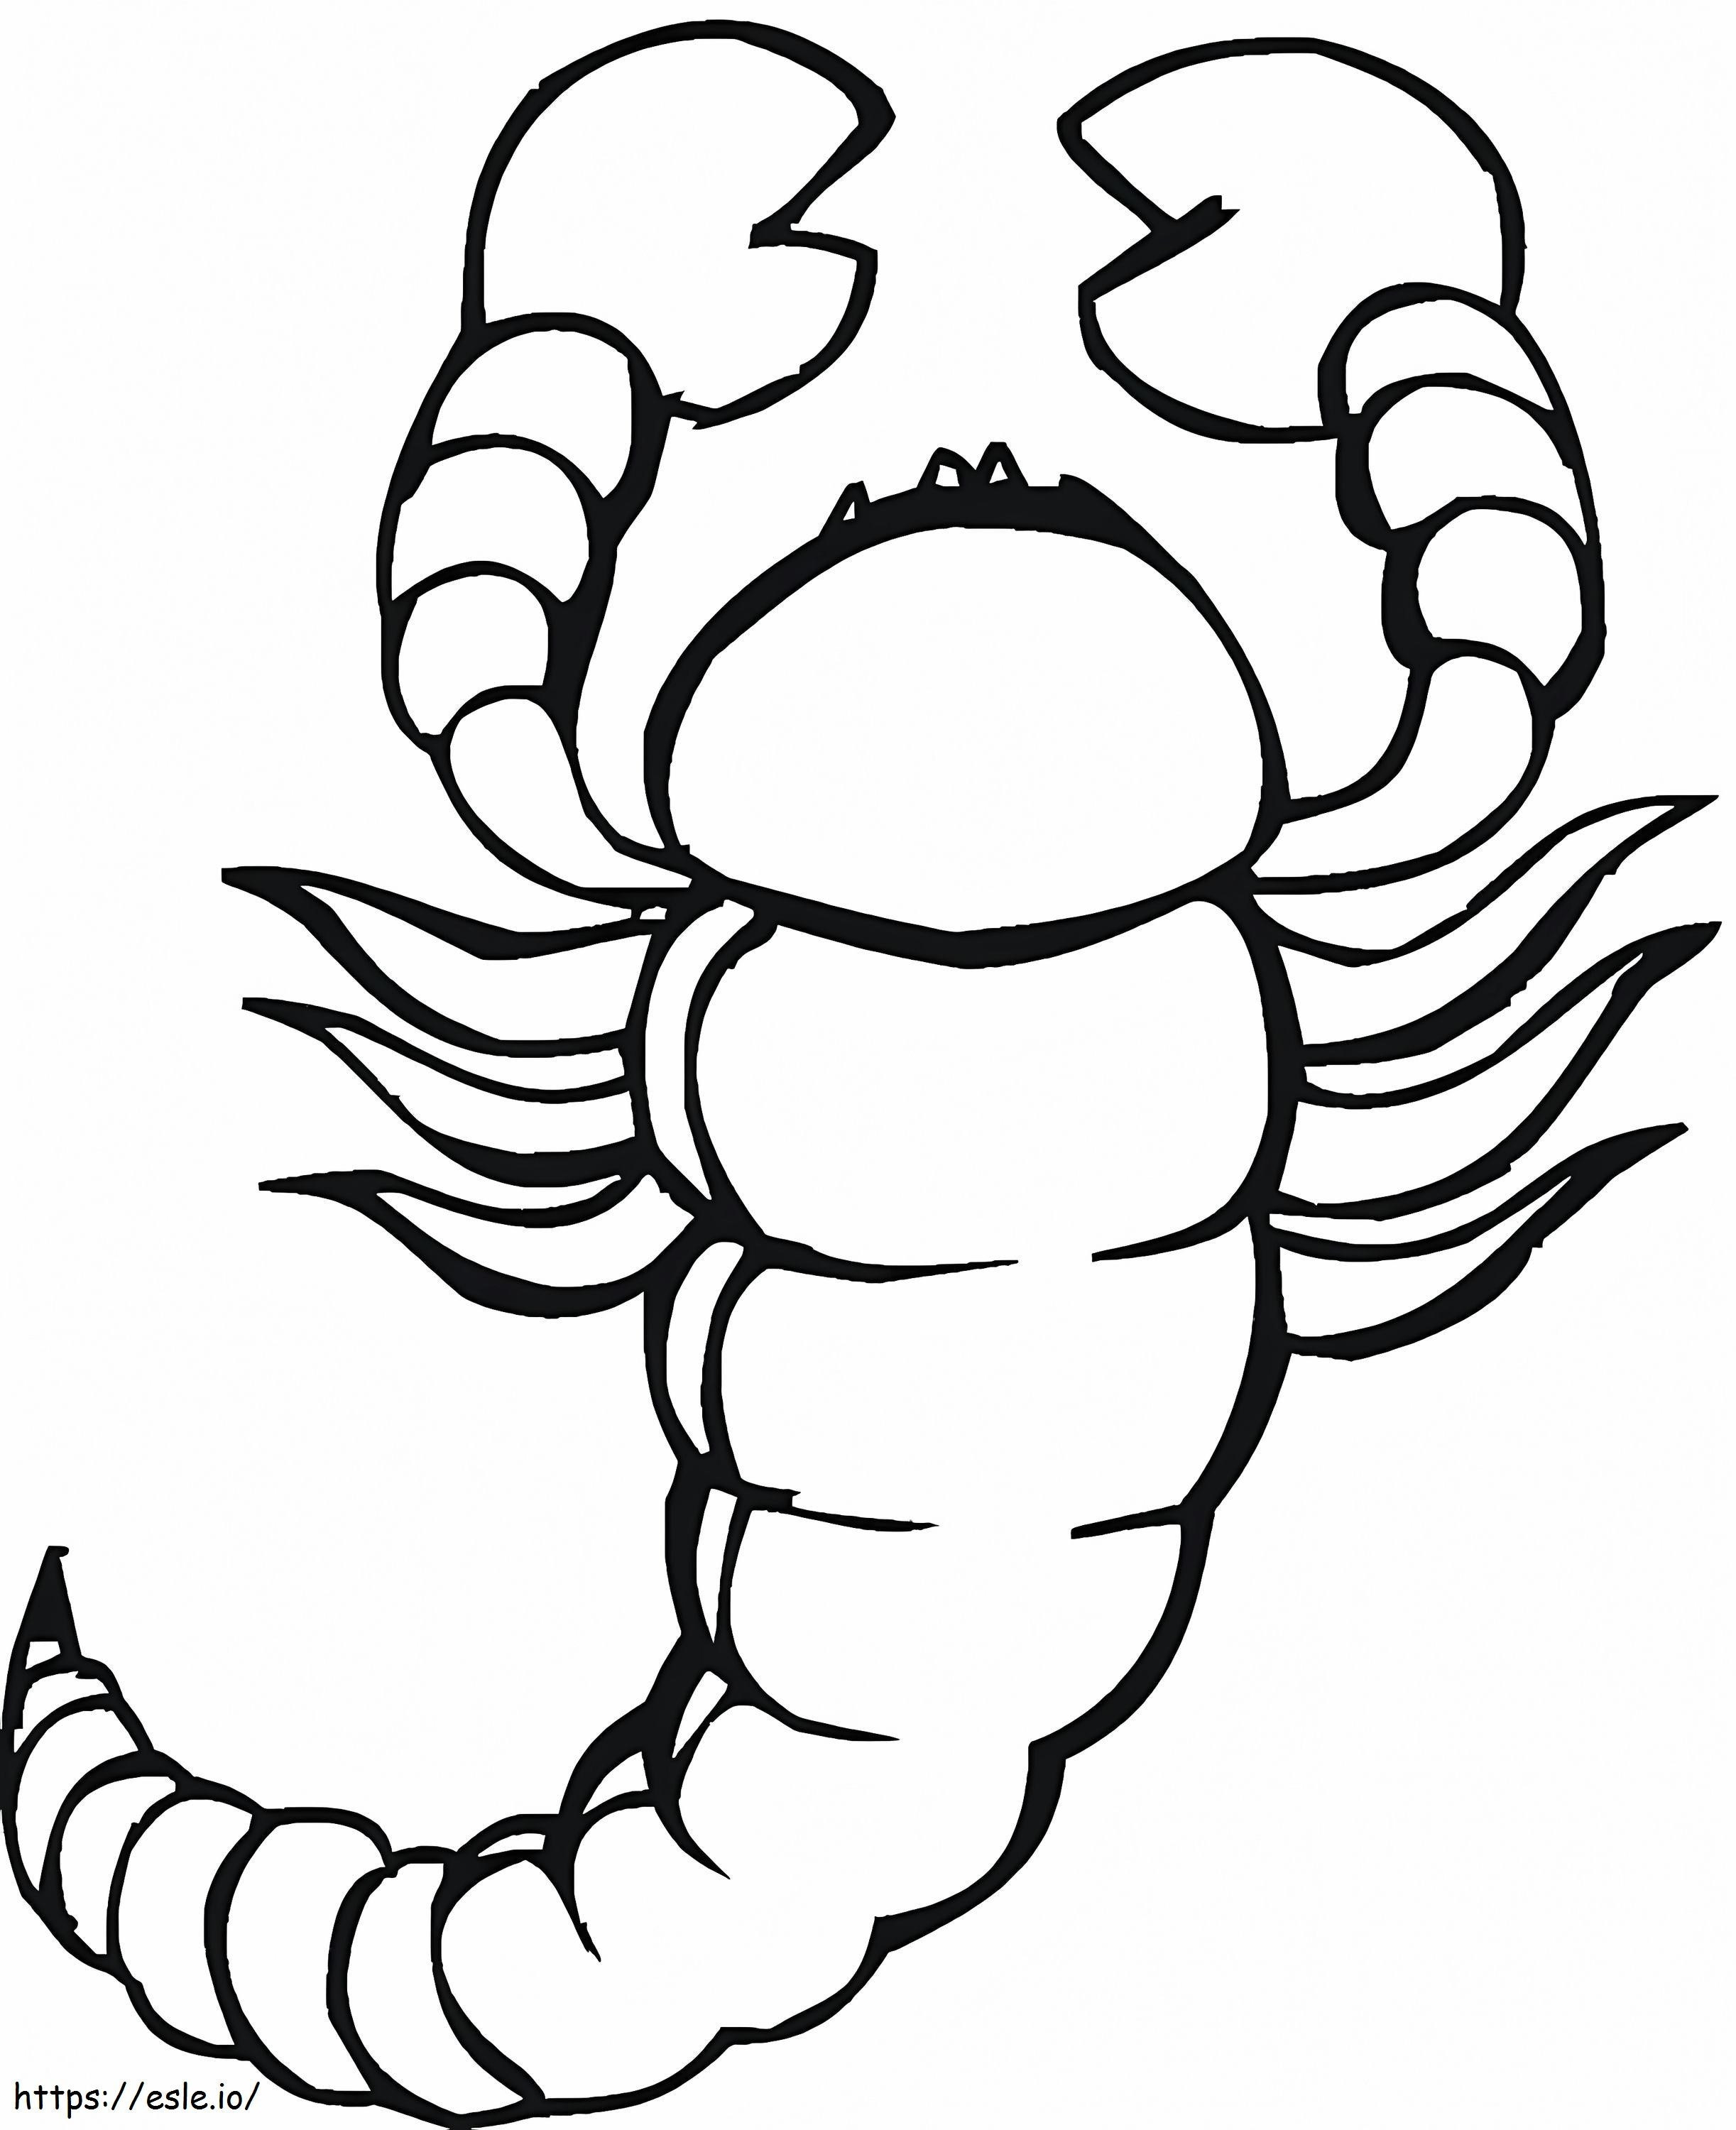 Skorpion 3 ausmalbilder